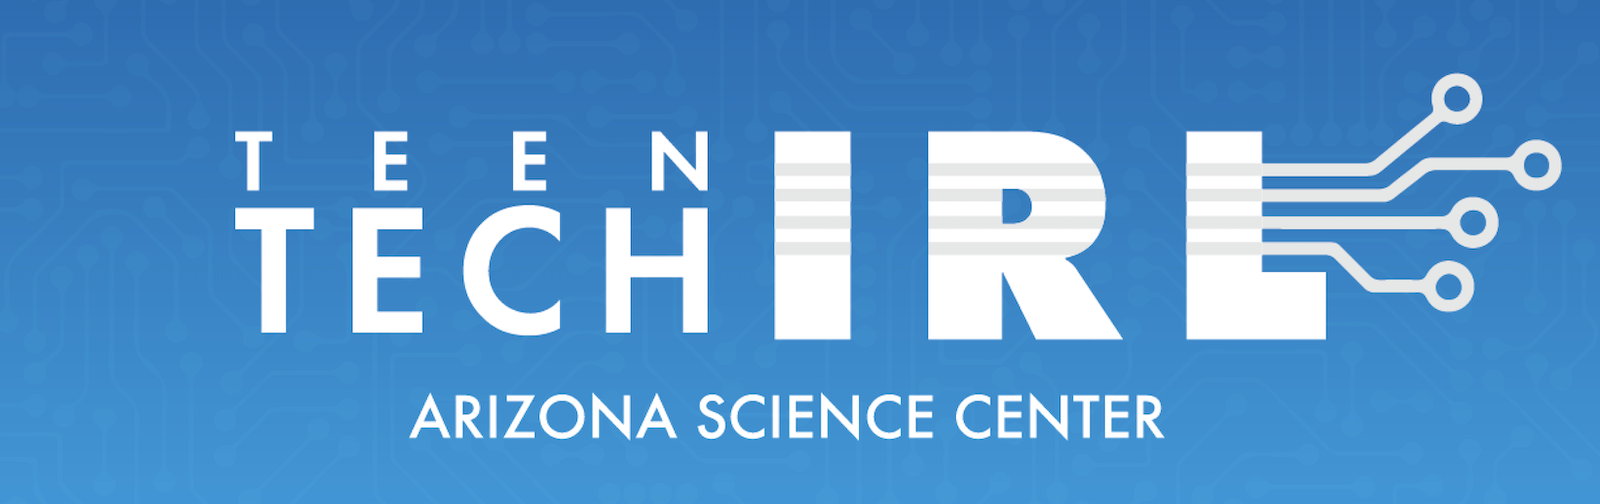 Teen Programs at Arizona Science Center